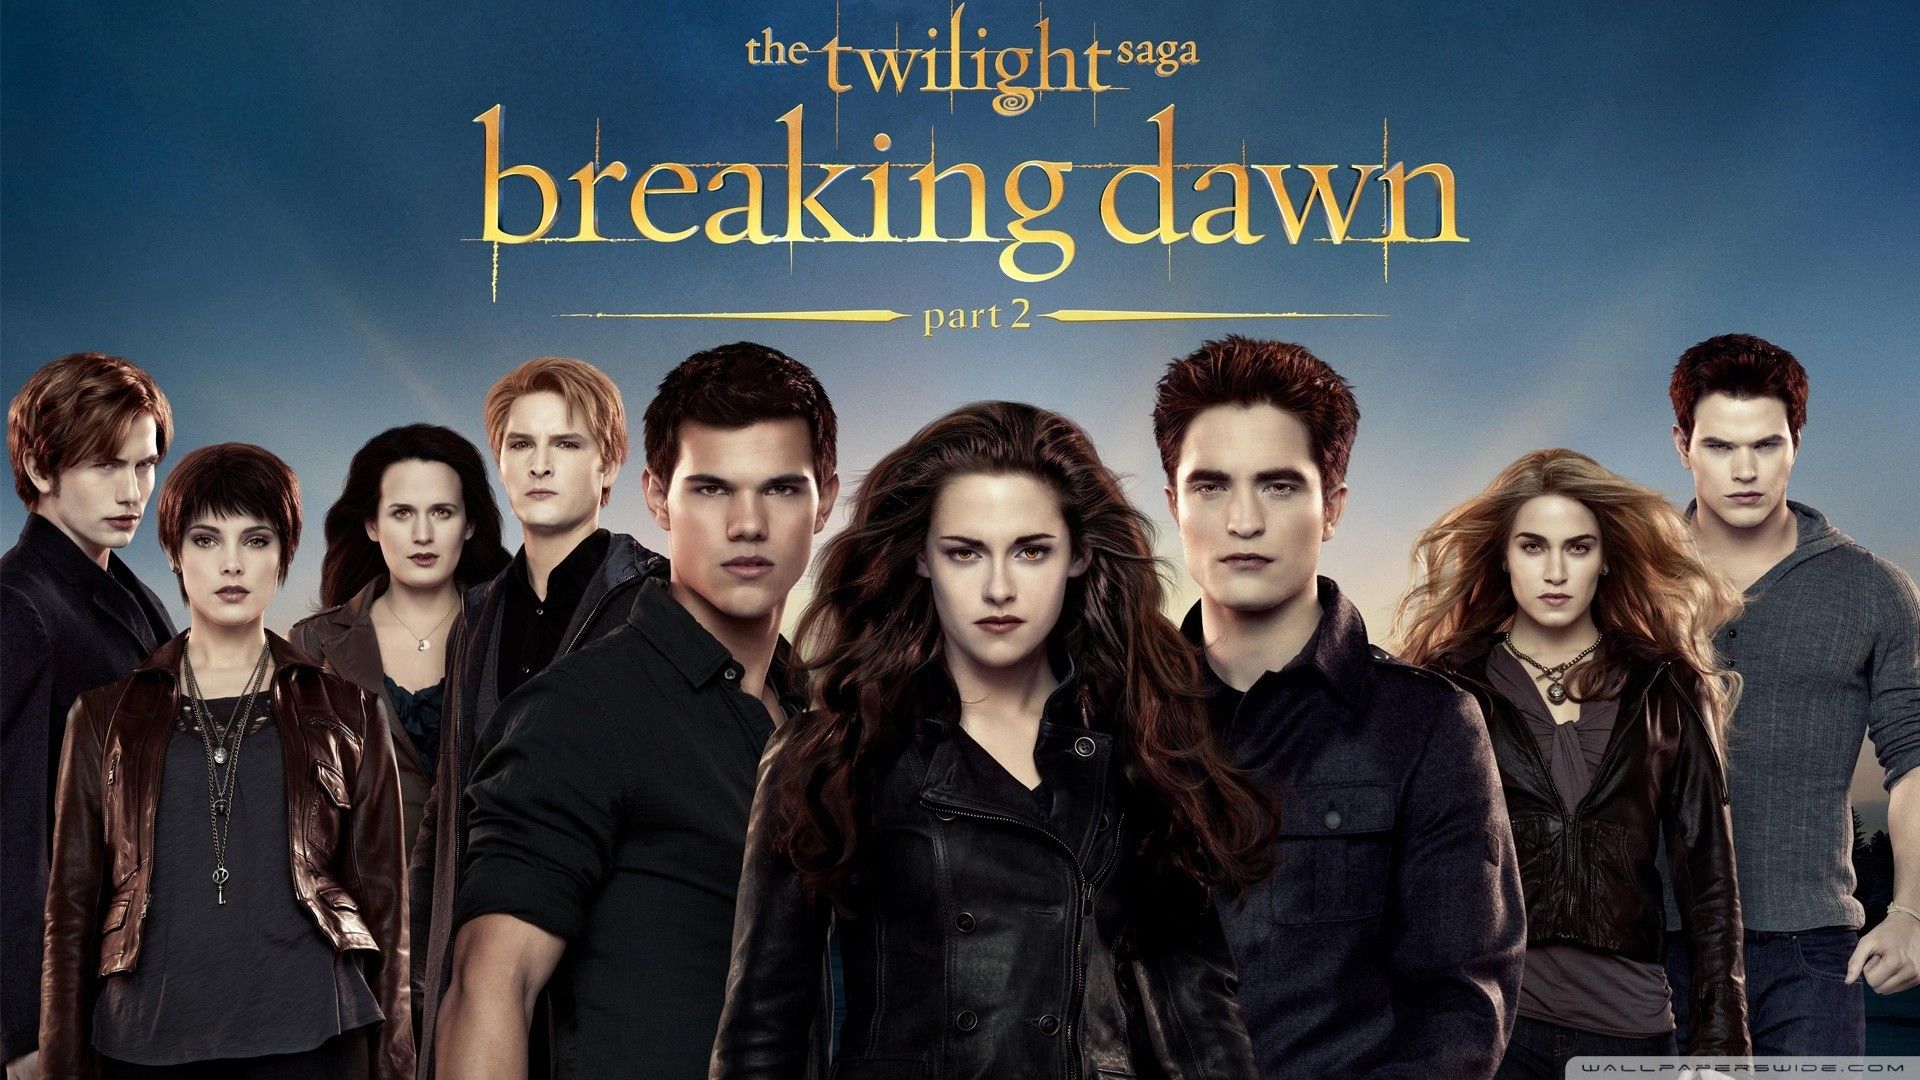 The Twilight Saga Breaking Dawn Part 2 wallpaper 1920x1080 - Twilight